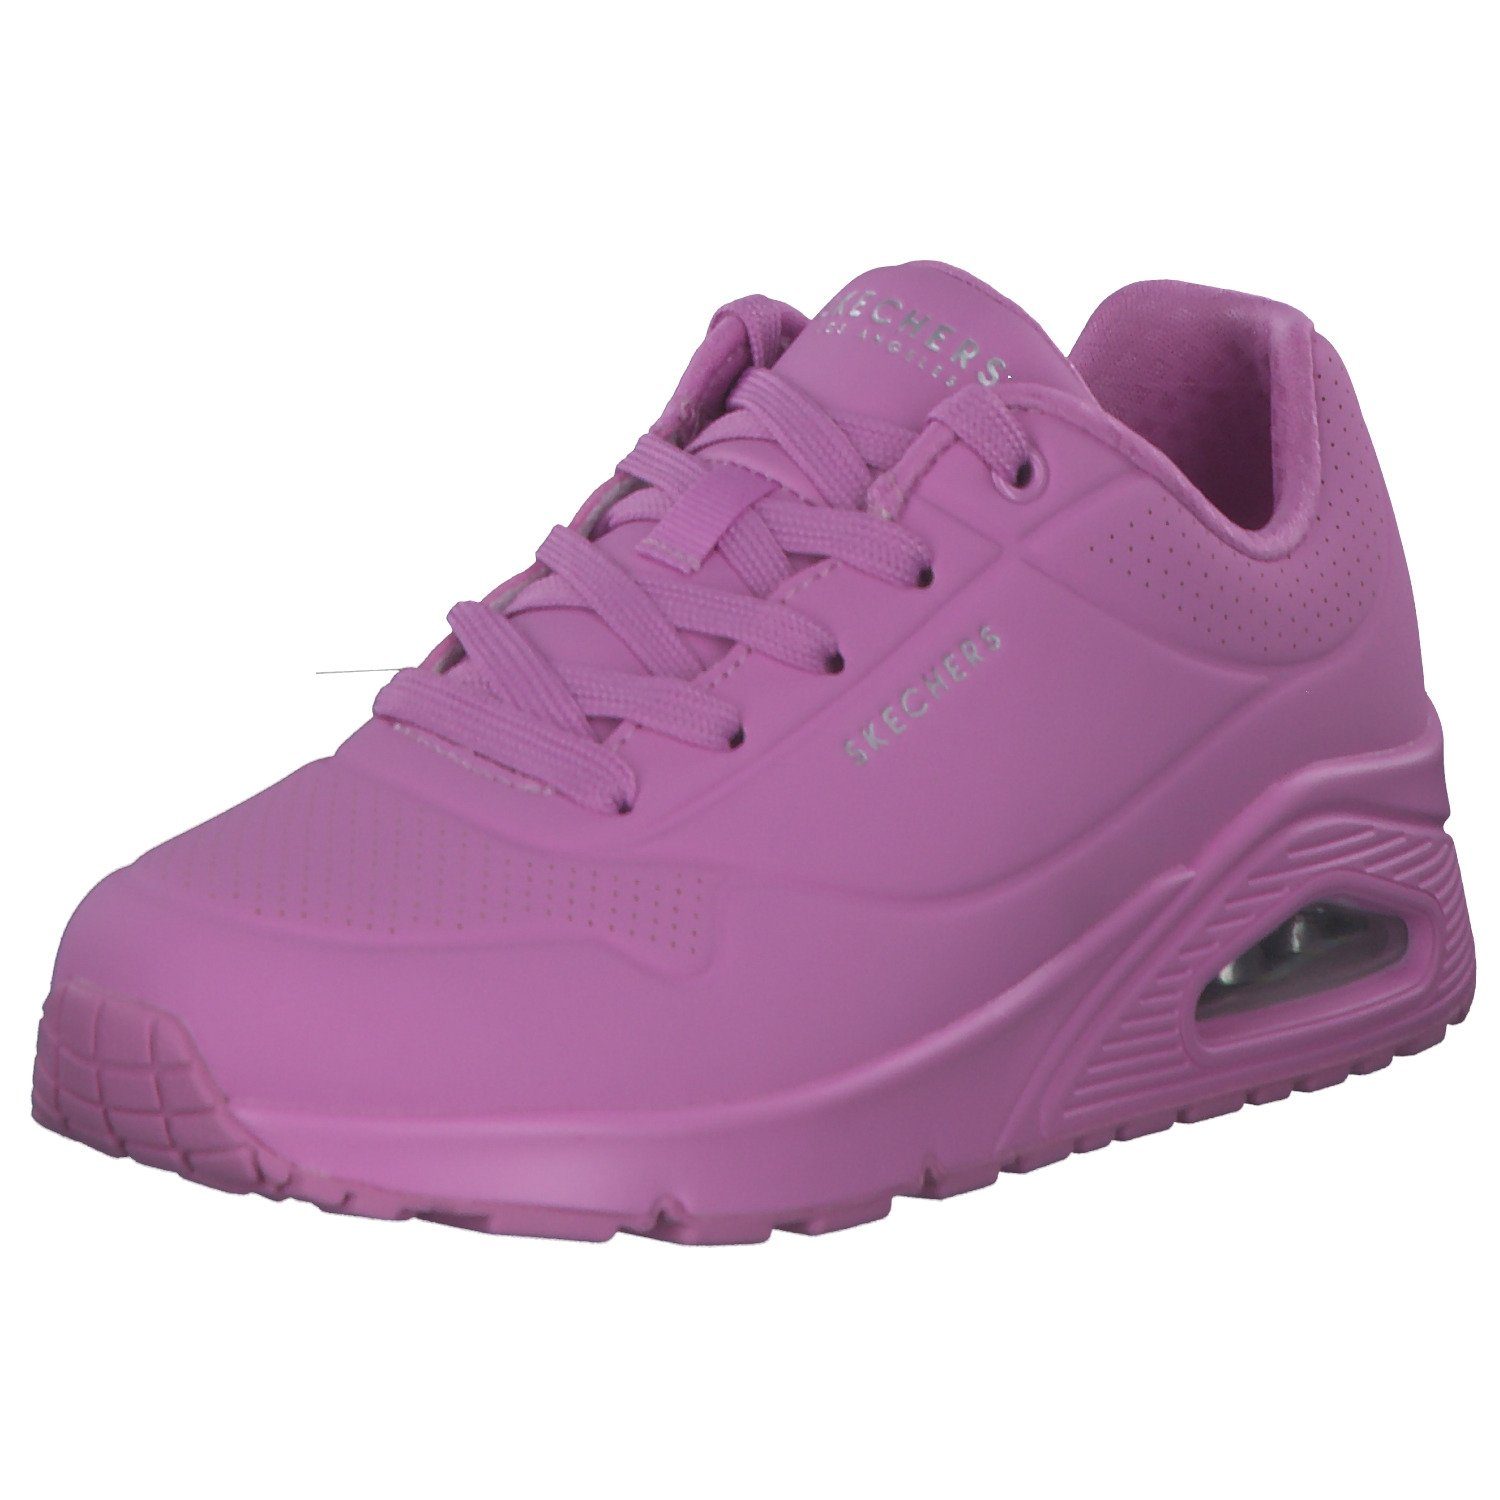 (20203090) Uno pink Sneaker 73690 Skechers Stand On Skechers Air